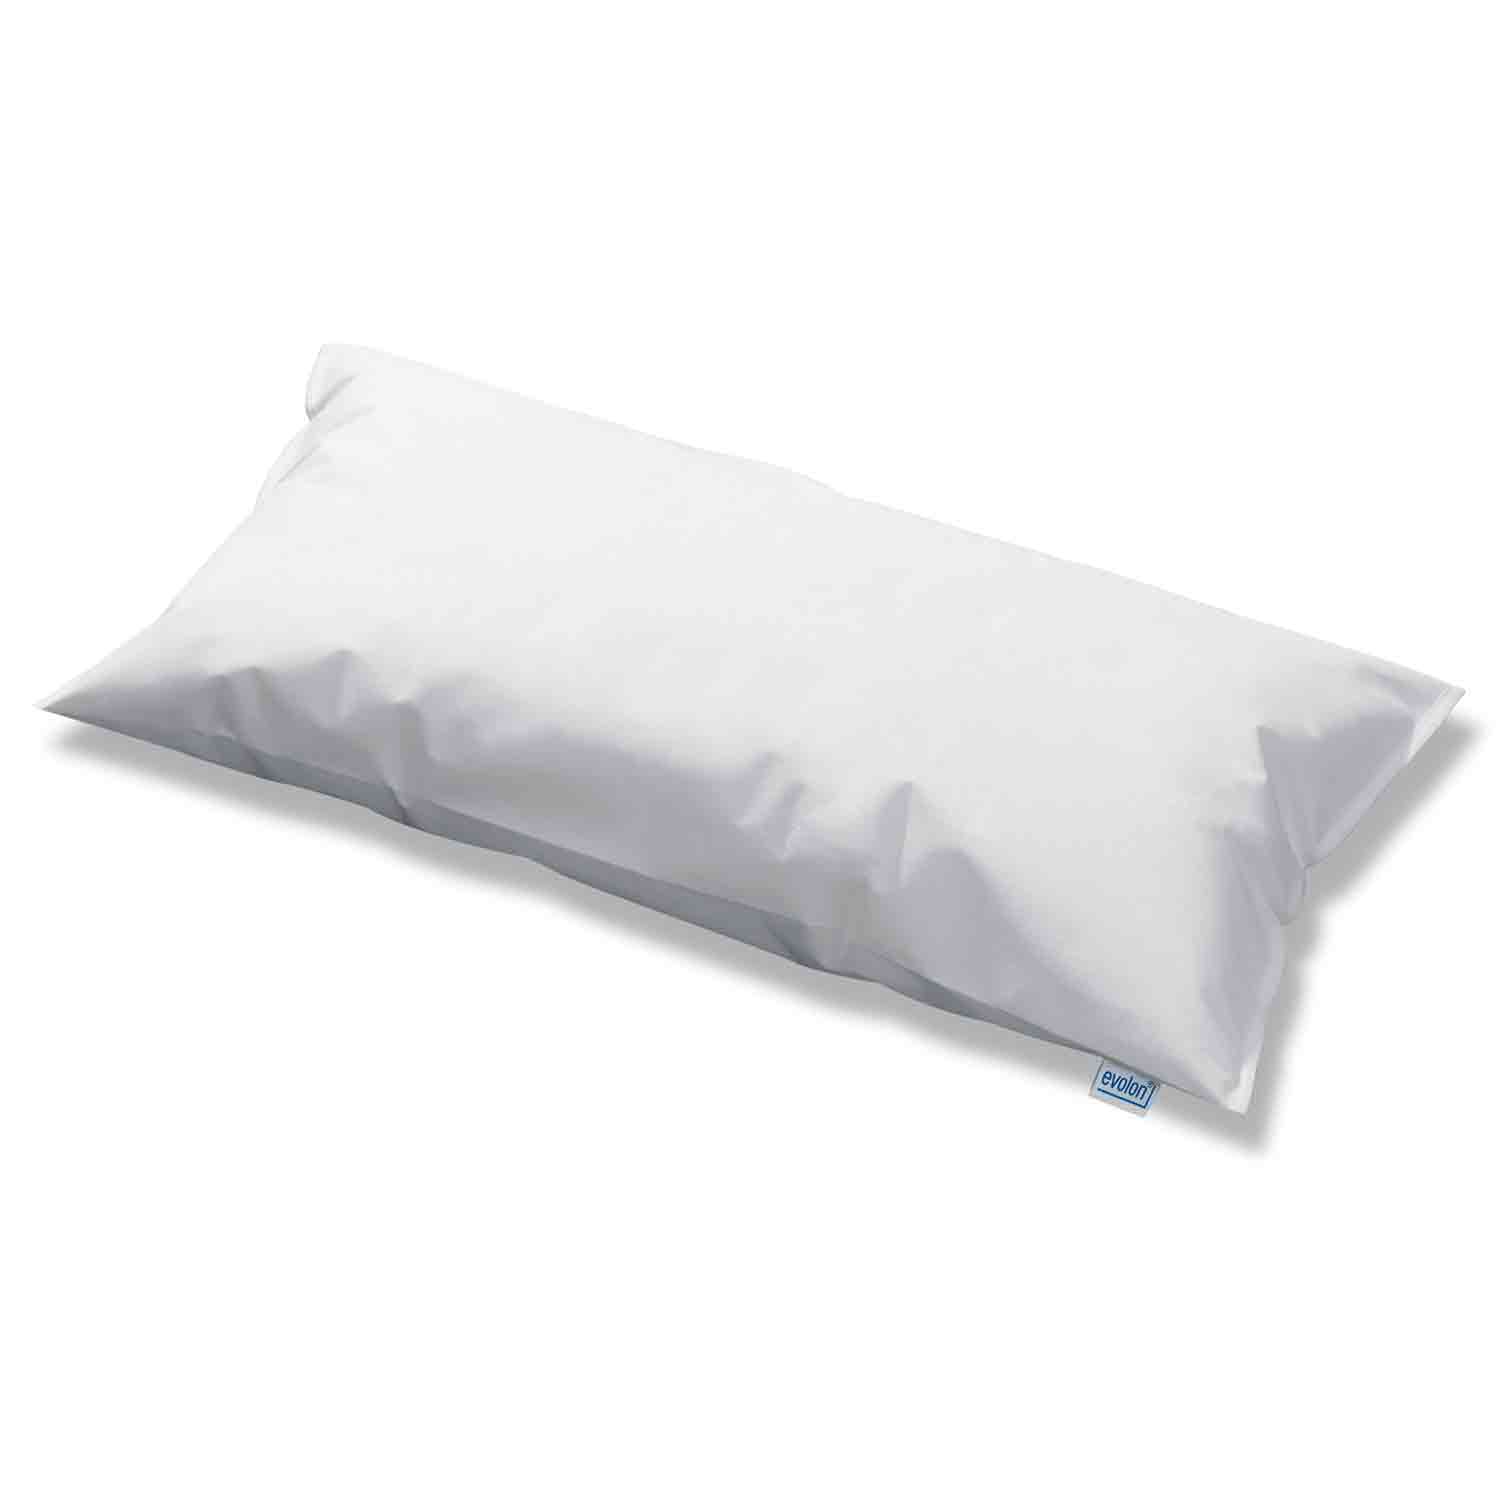 Encasings Schutzbezug für Kissen, Decke & Matratze,  aus Filament-Gewebe mit Reissverschluss Matratzenschutzbezug 90/200